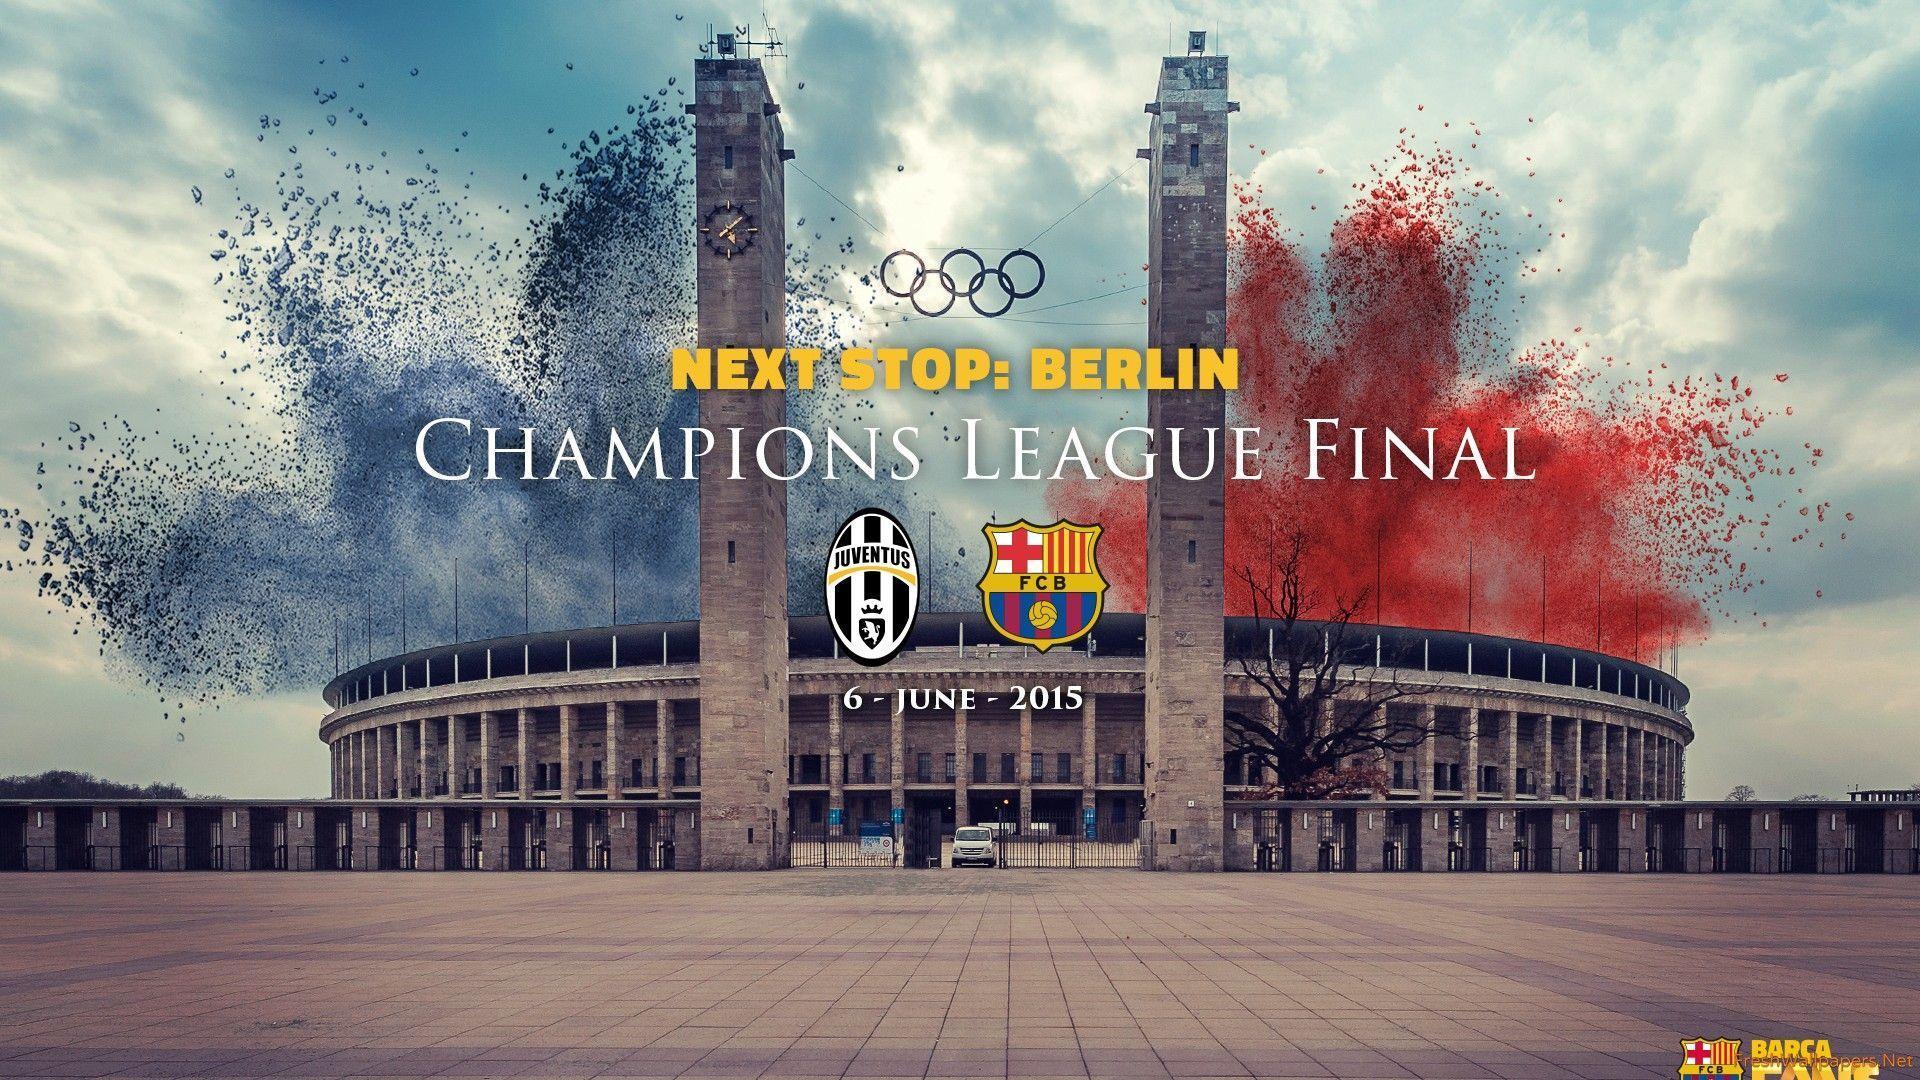 UEFA Champions League Final Berlin 2015 Juve Vs Barca wallpaper